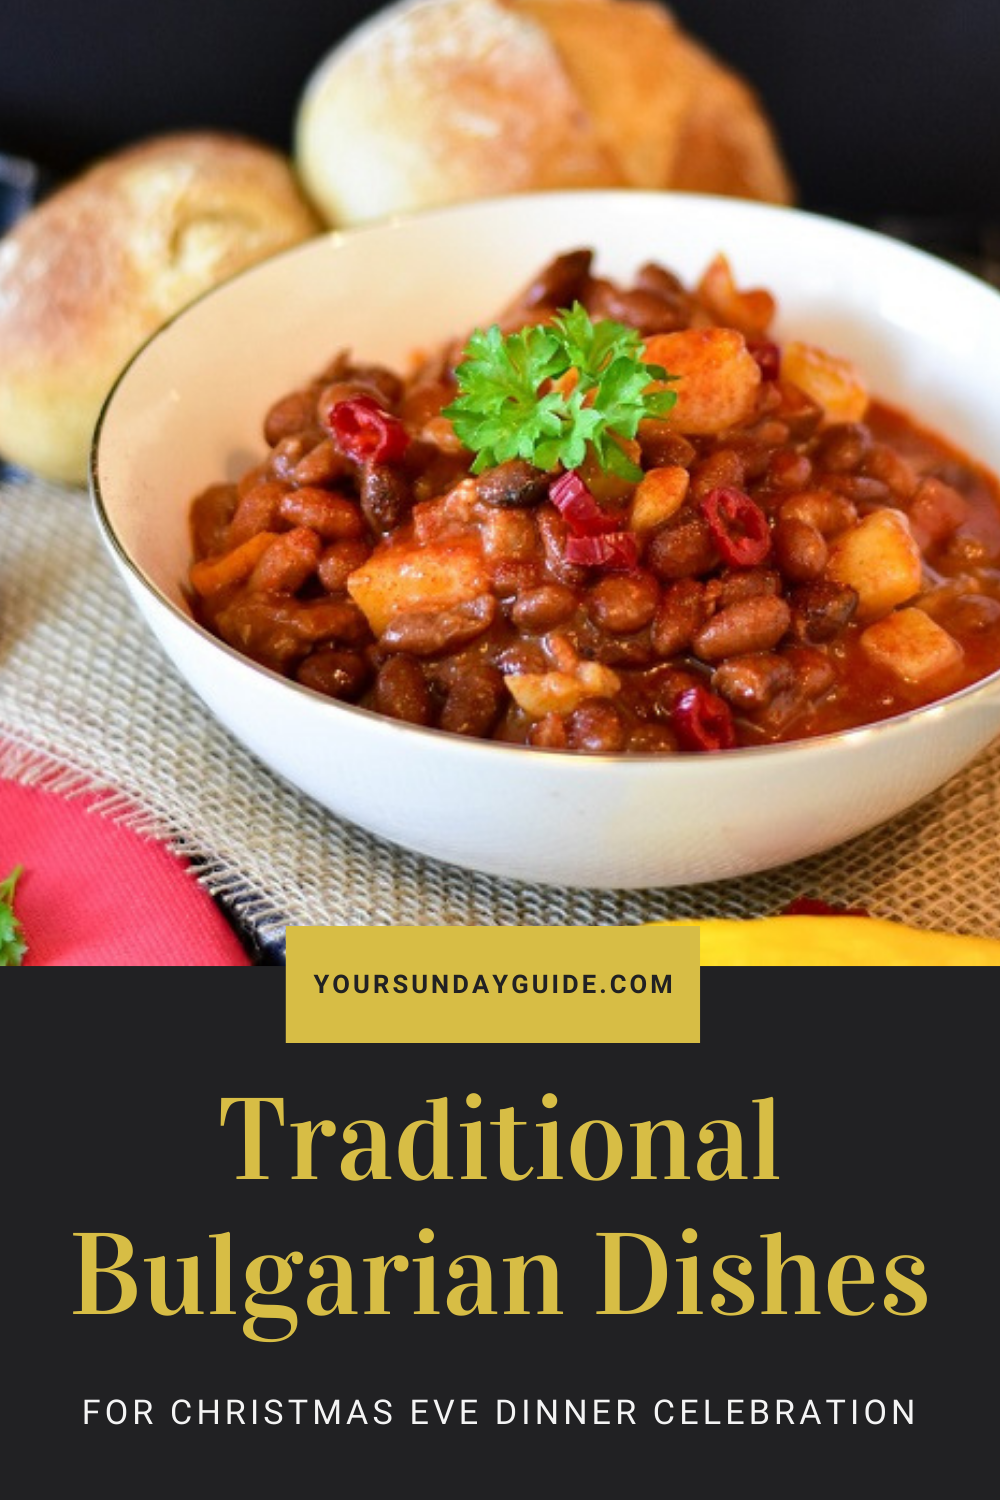 Bean soup-traditional Bulgarian dish for Christmas Eve